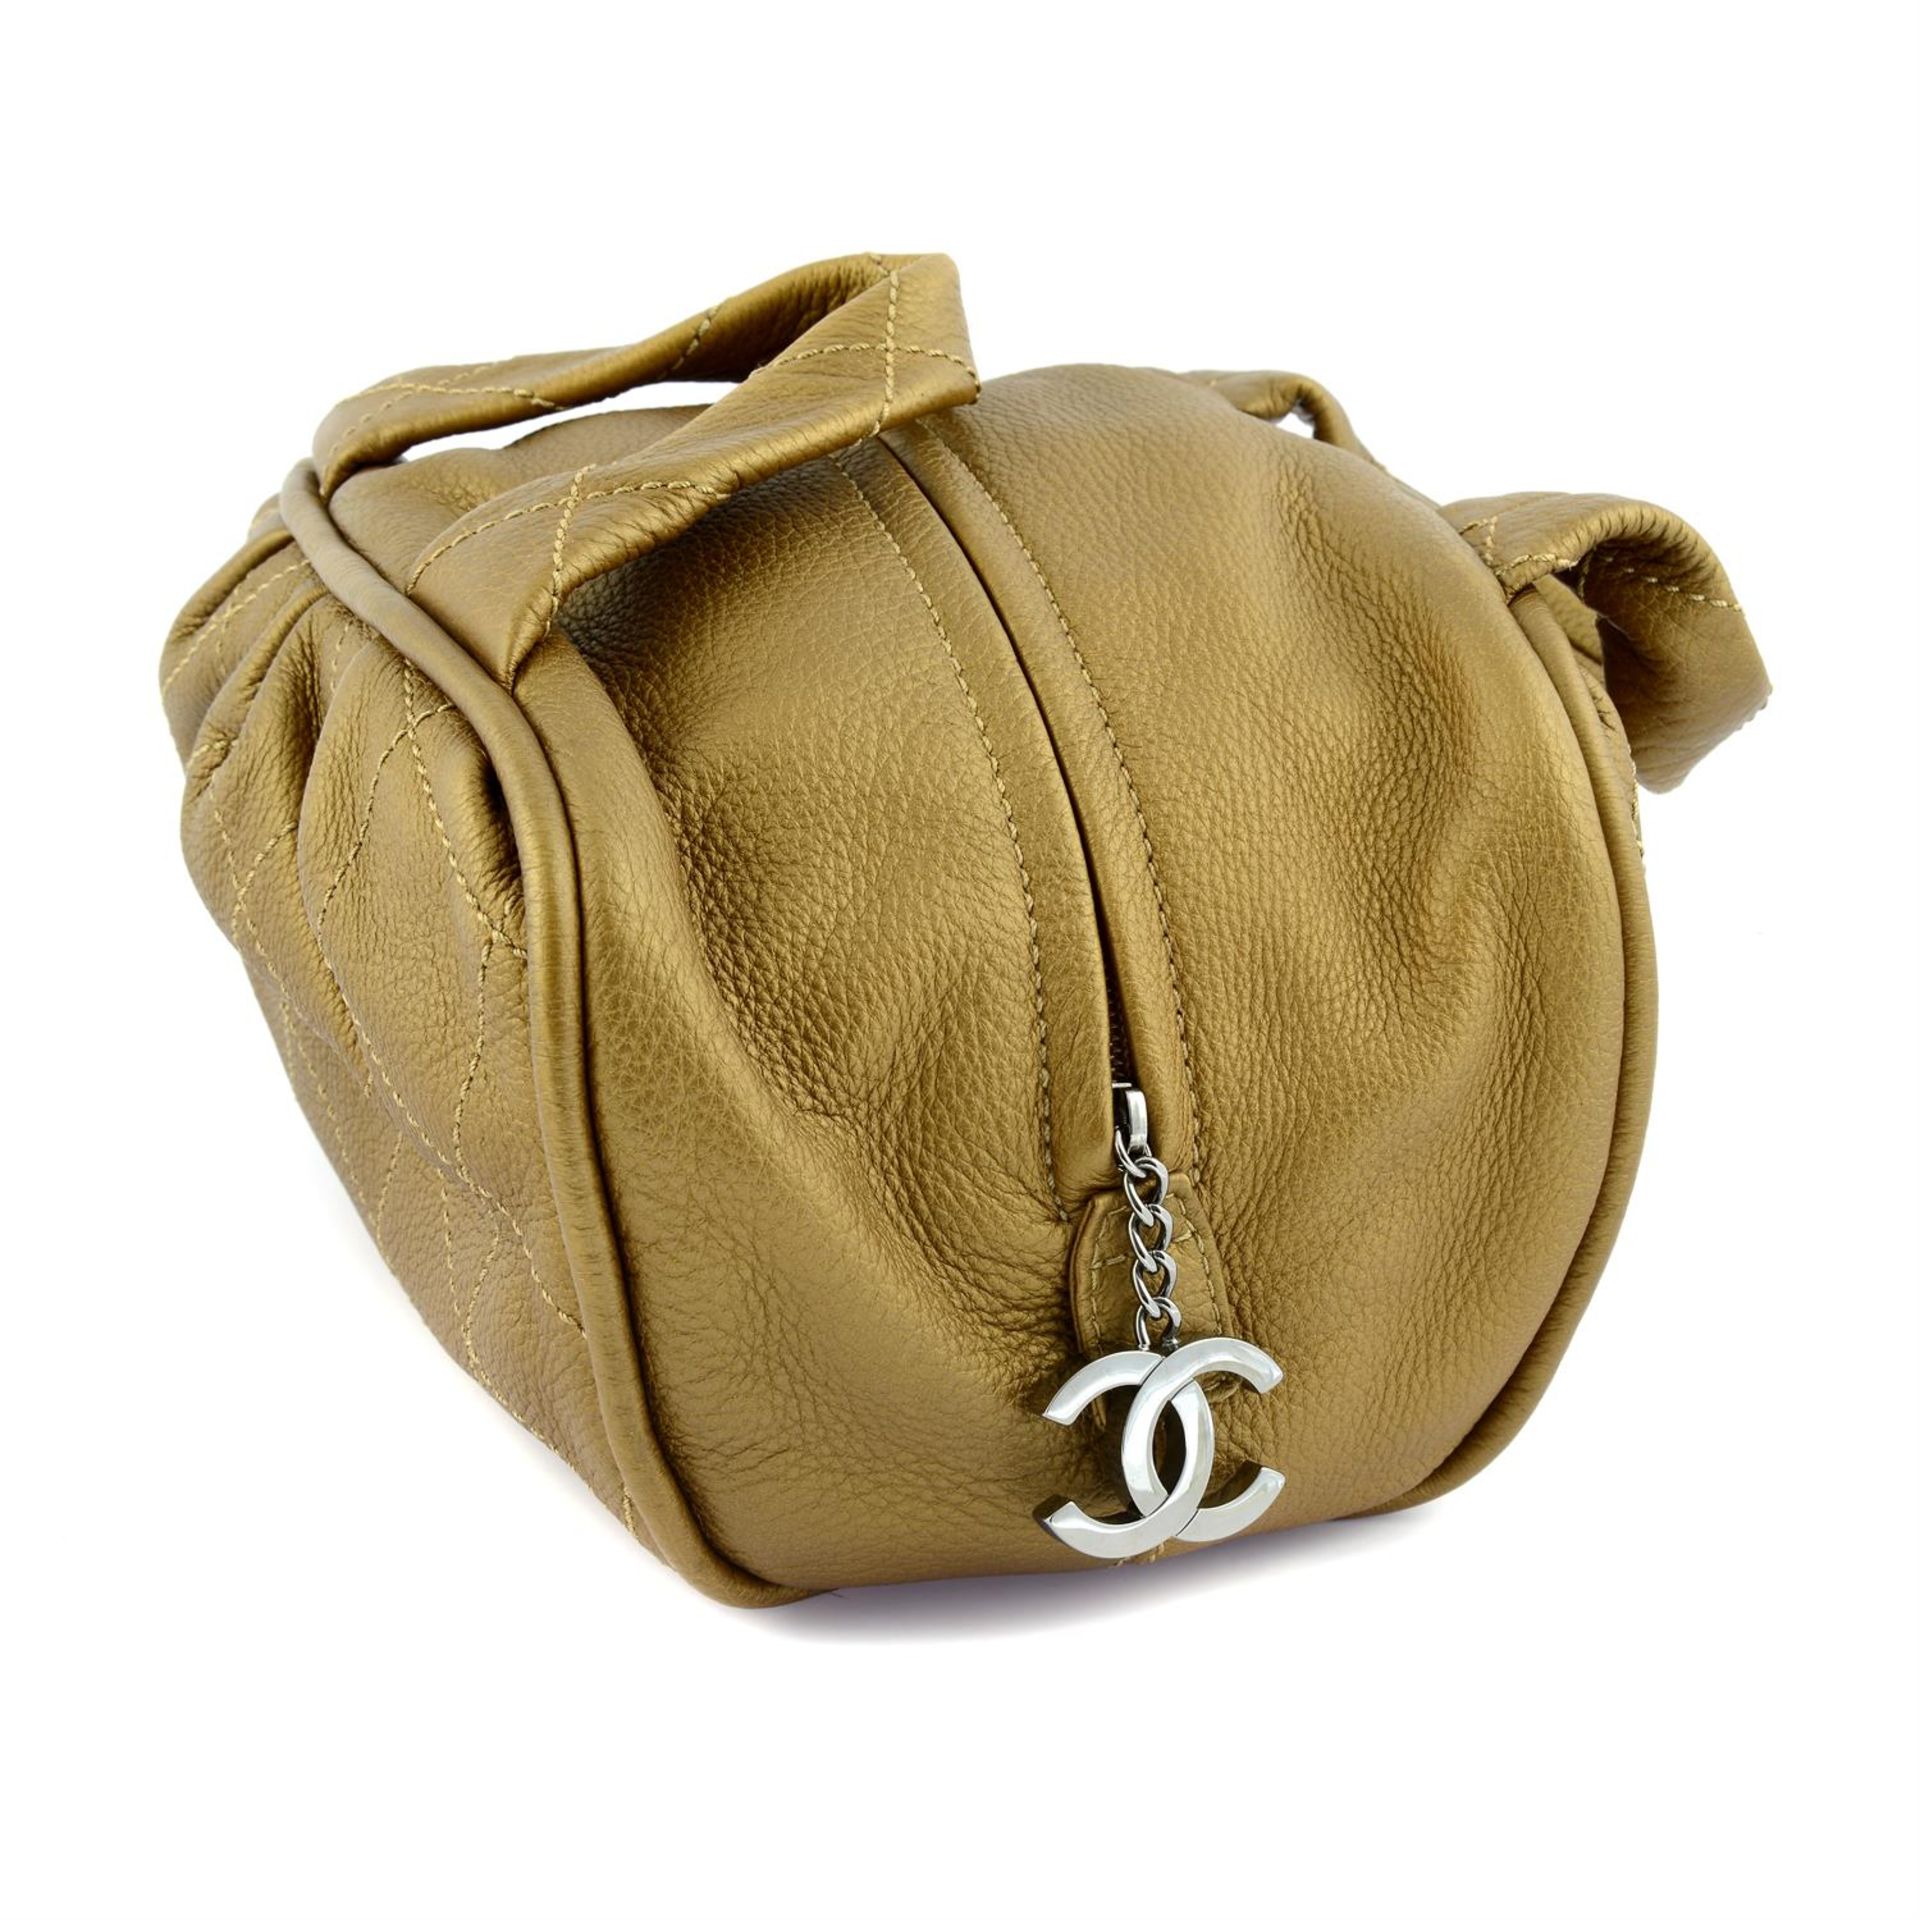 CHANEL - a gold-tone leather handbag. - Image 3 of 5